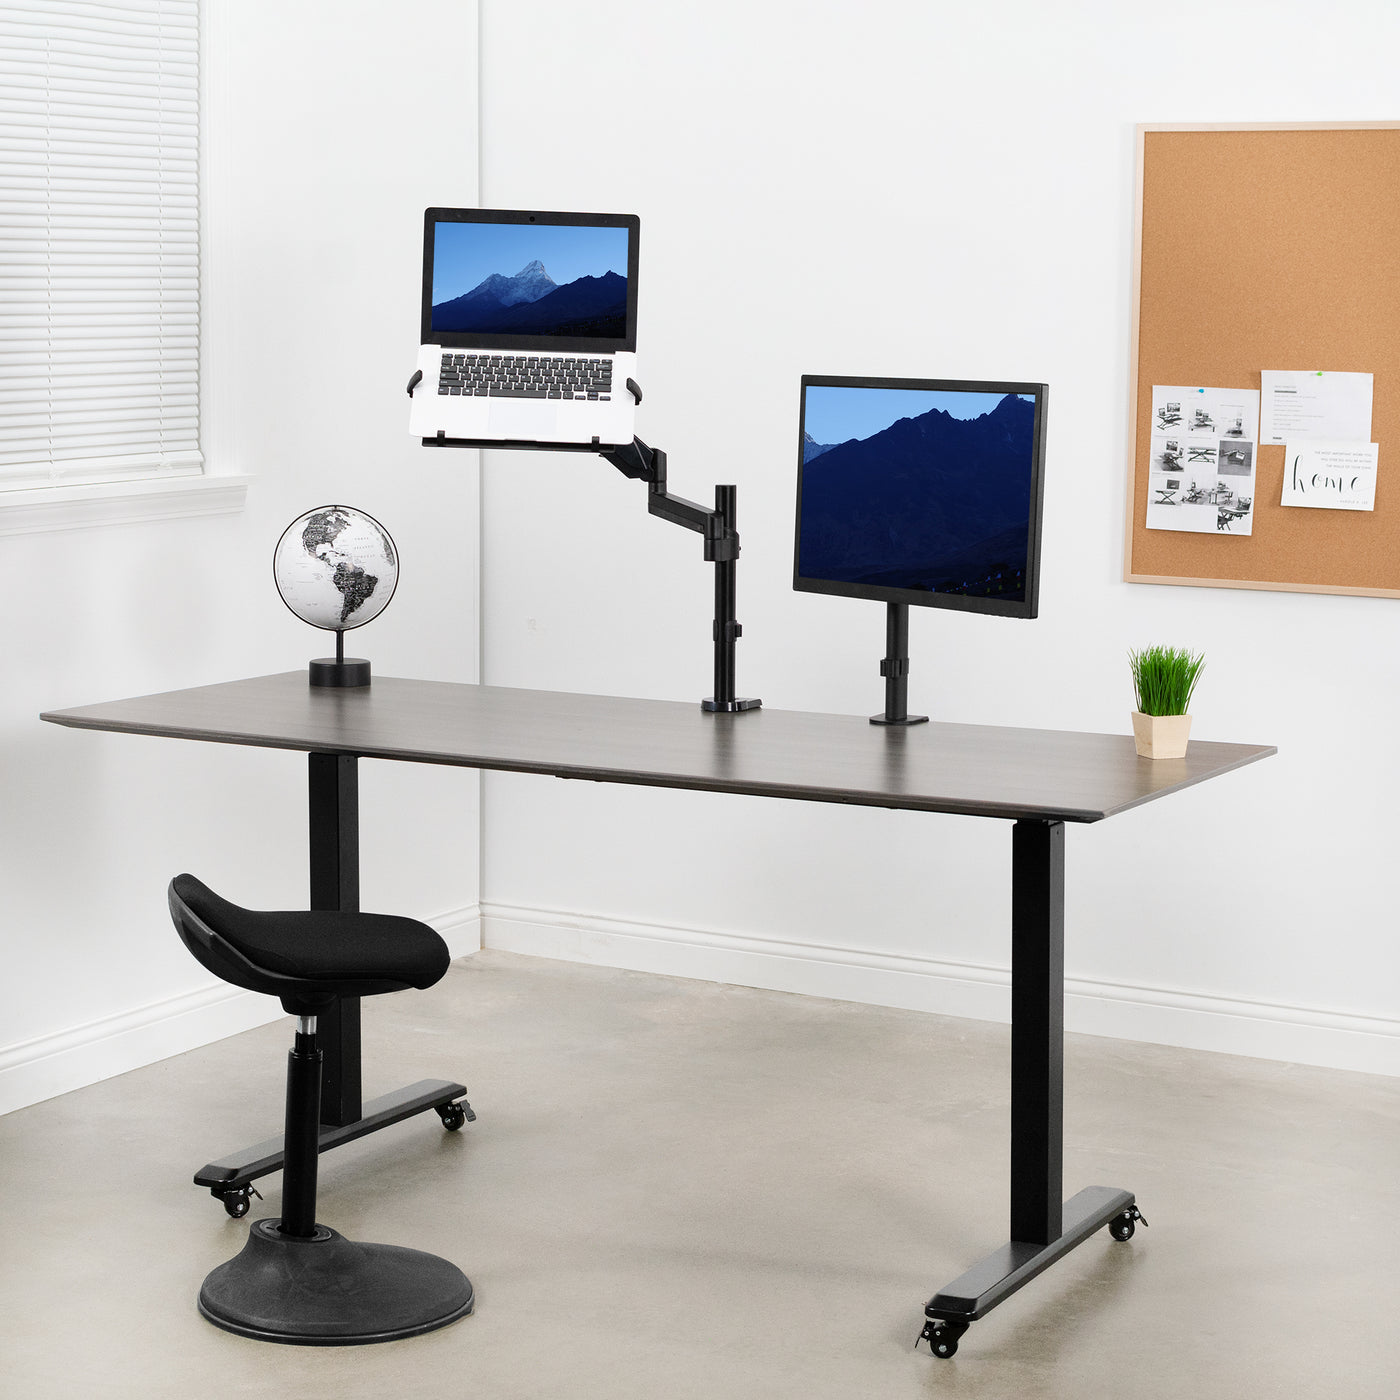 Pneumatic Arm Single Laptop Desk Mount